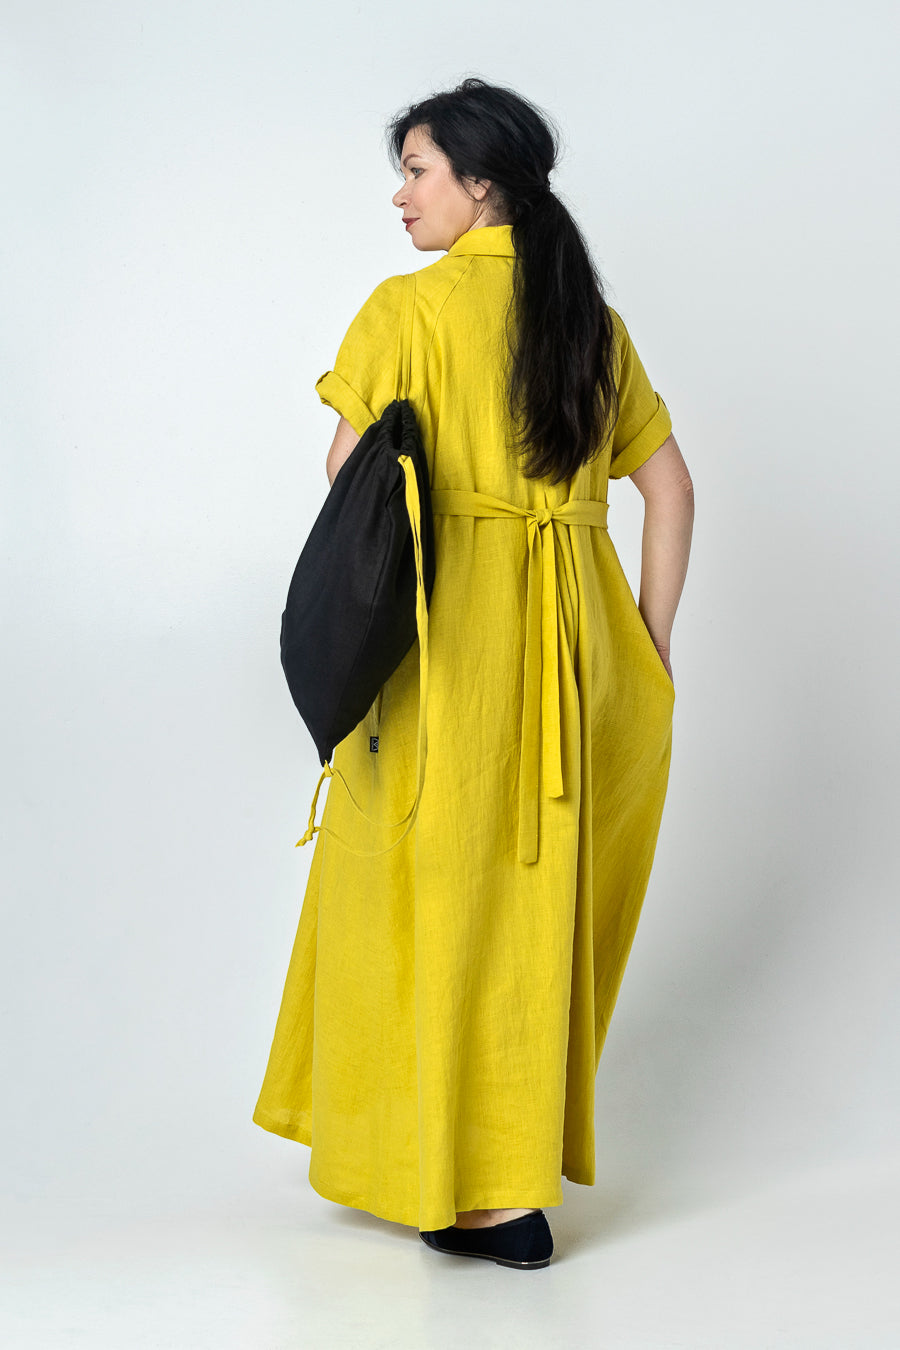 POMELO | Linen drawstring bag - Mezzoroni